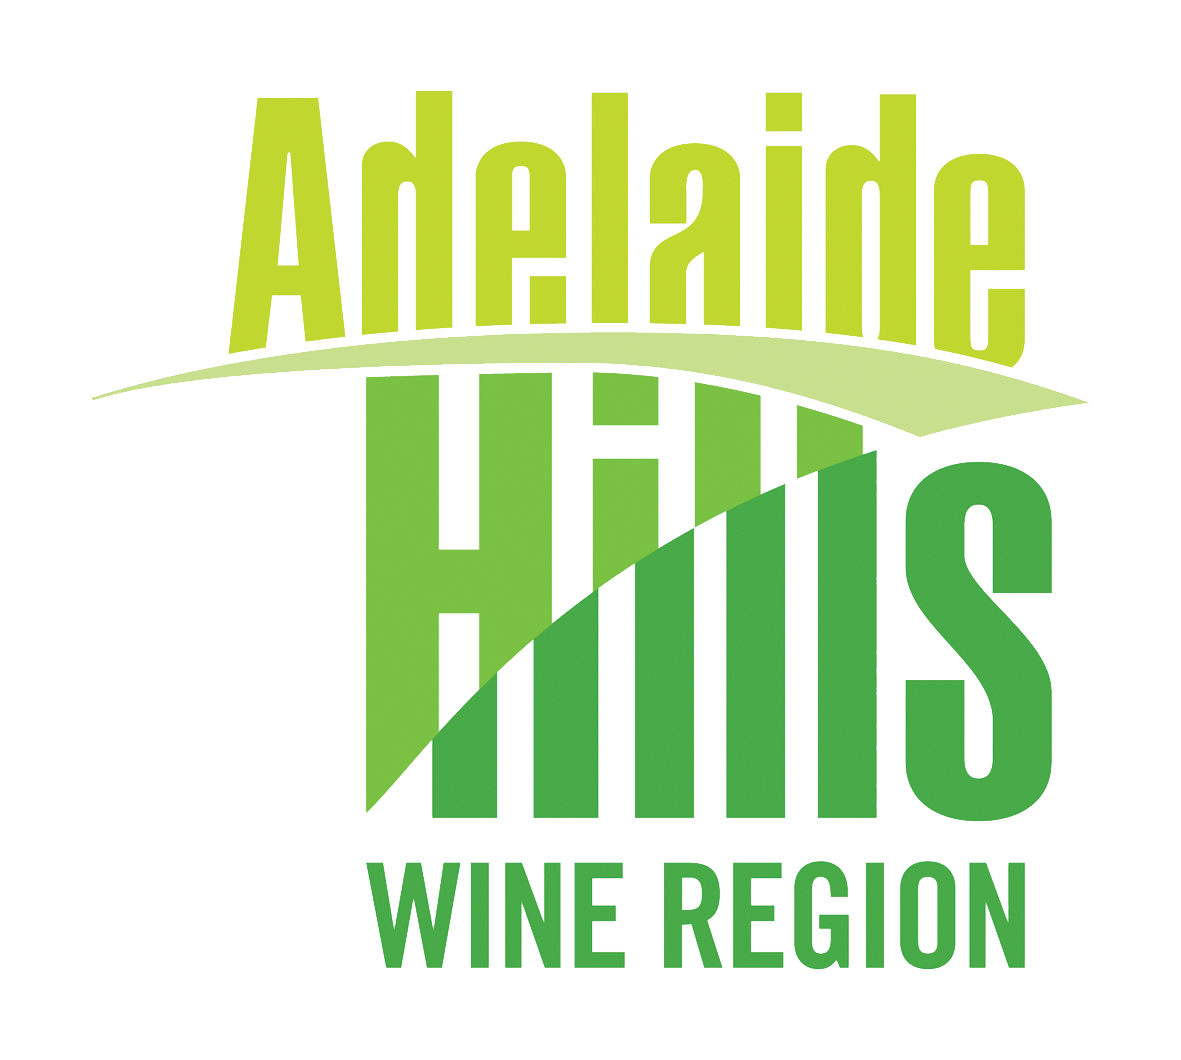 Adelaide Hills. Toggle naviga